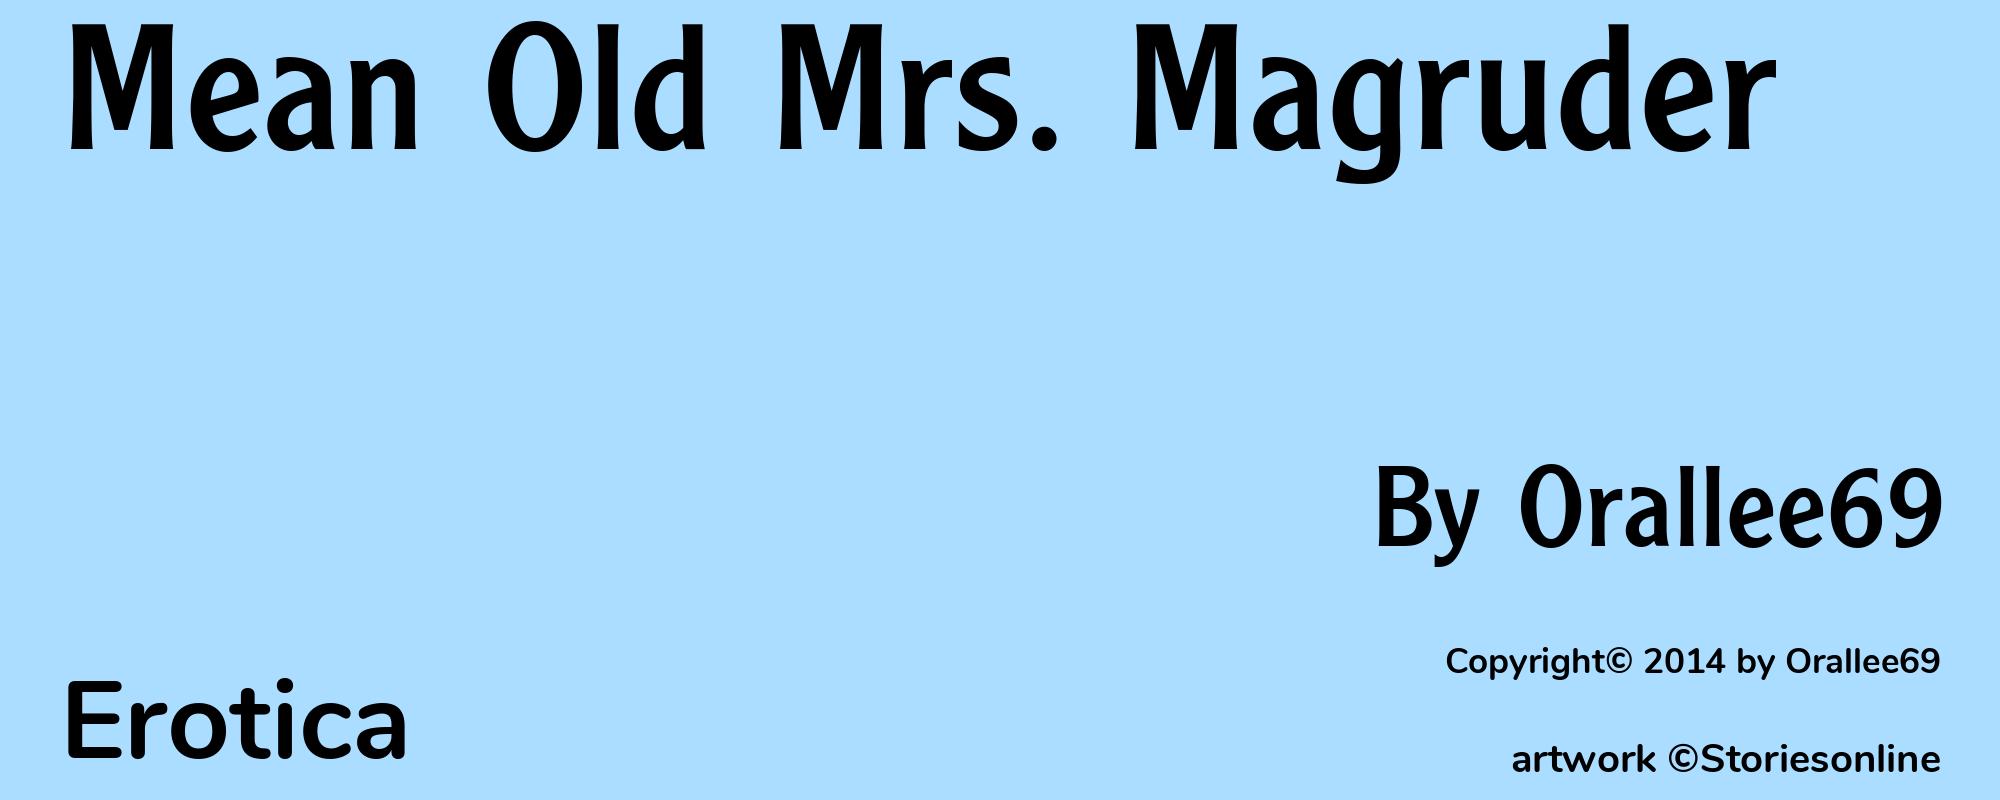 Mean Old Mrs. Magruder - Cover